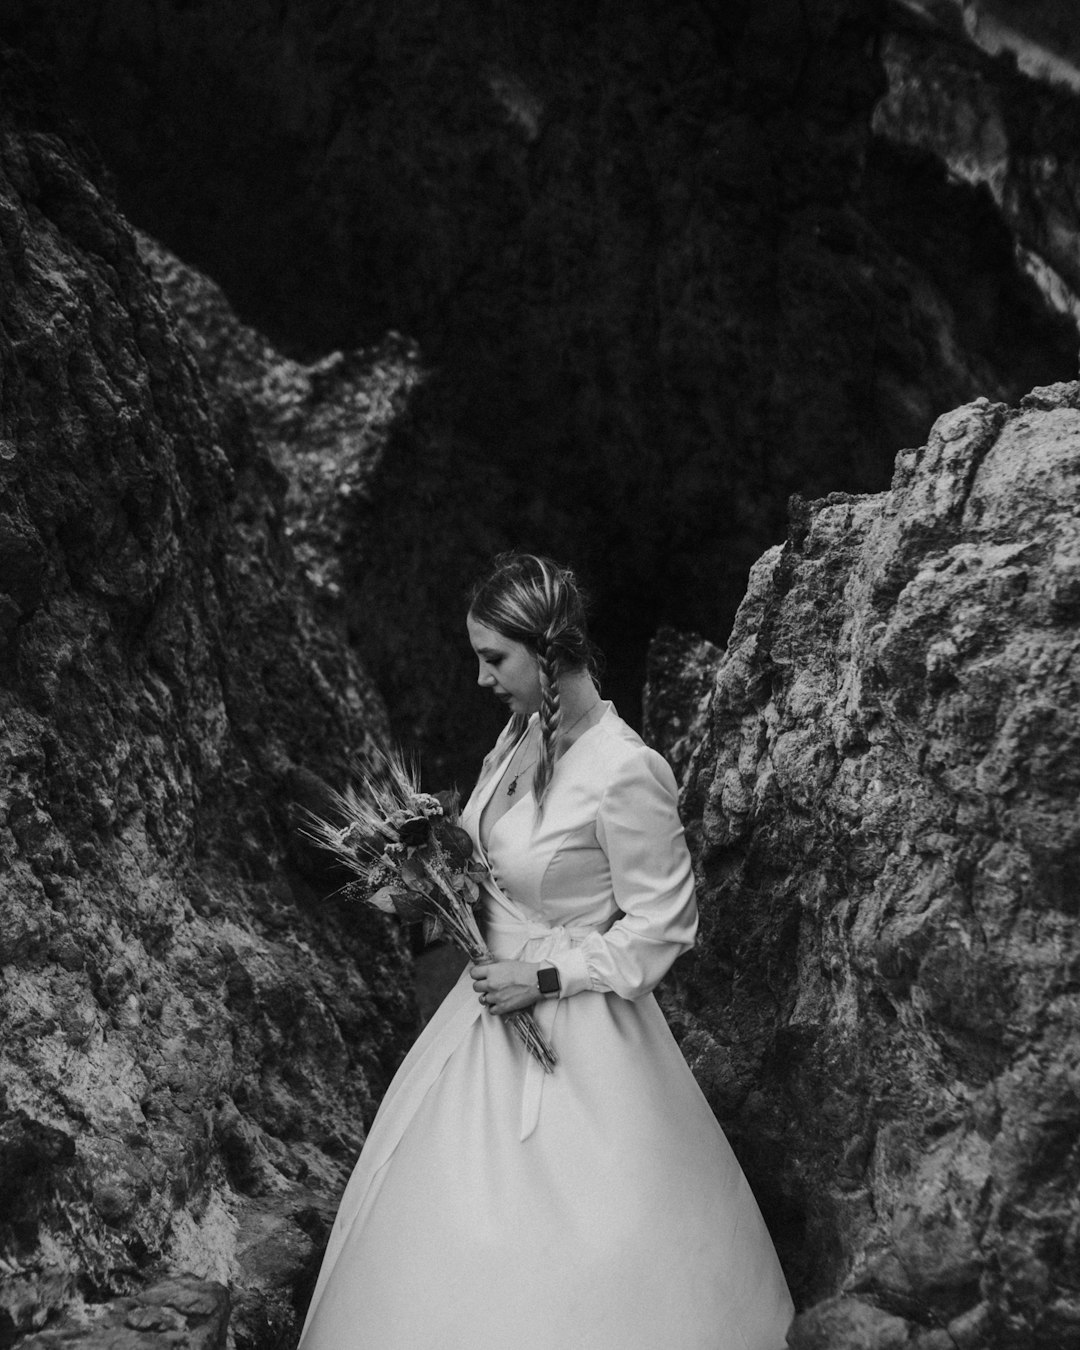 woman in white dress standing near rock formation